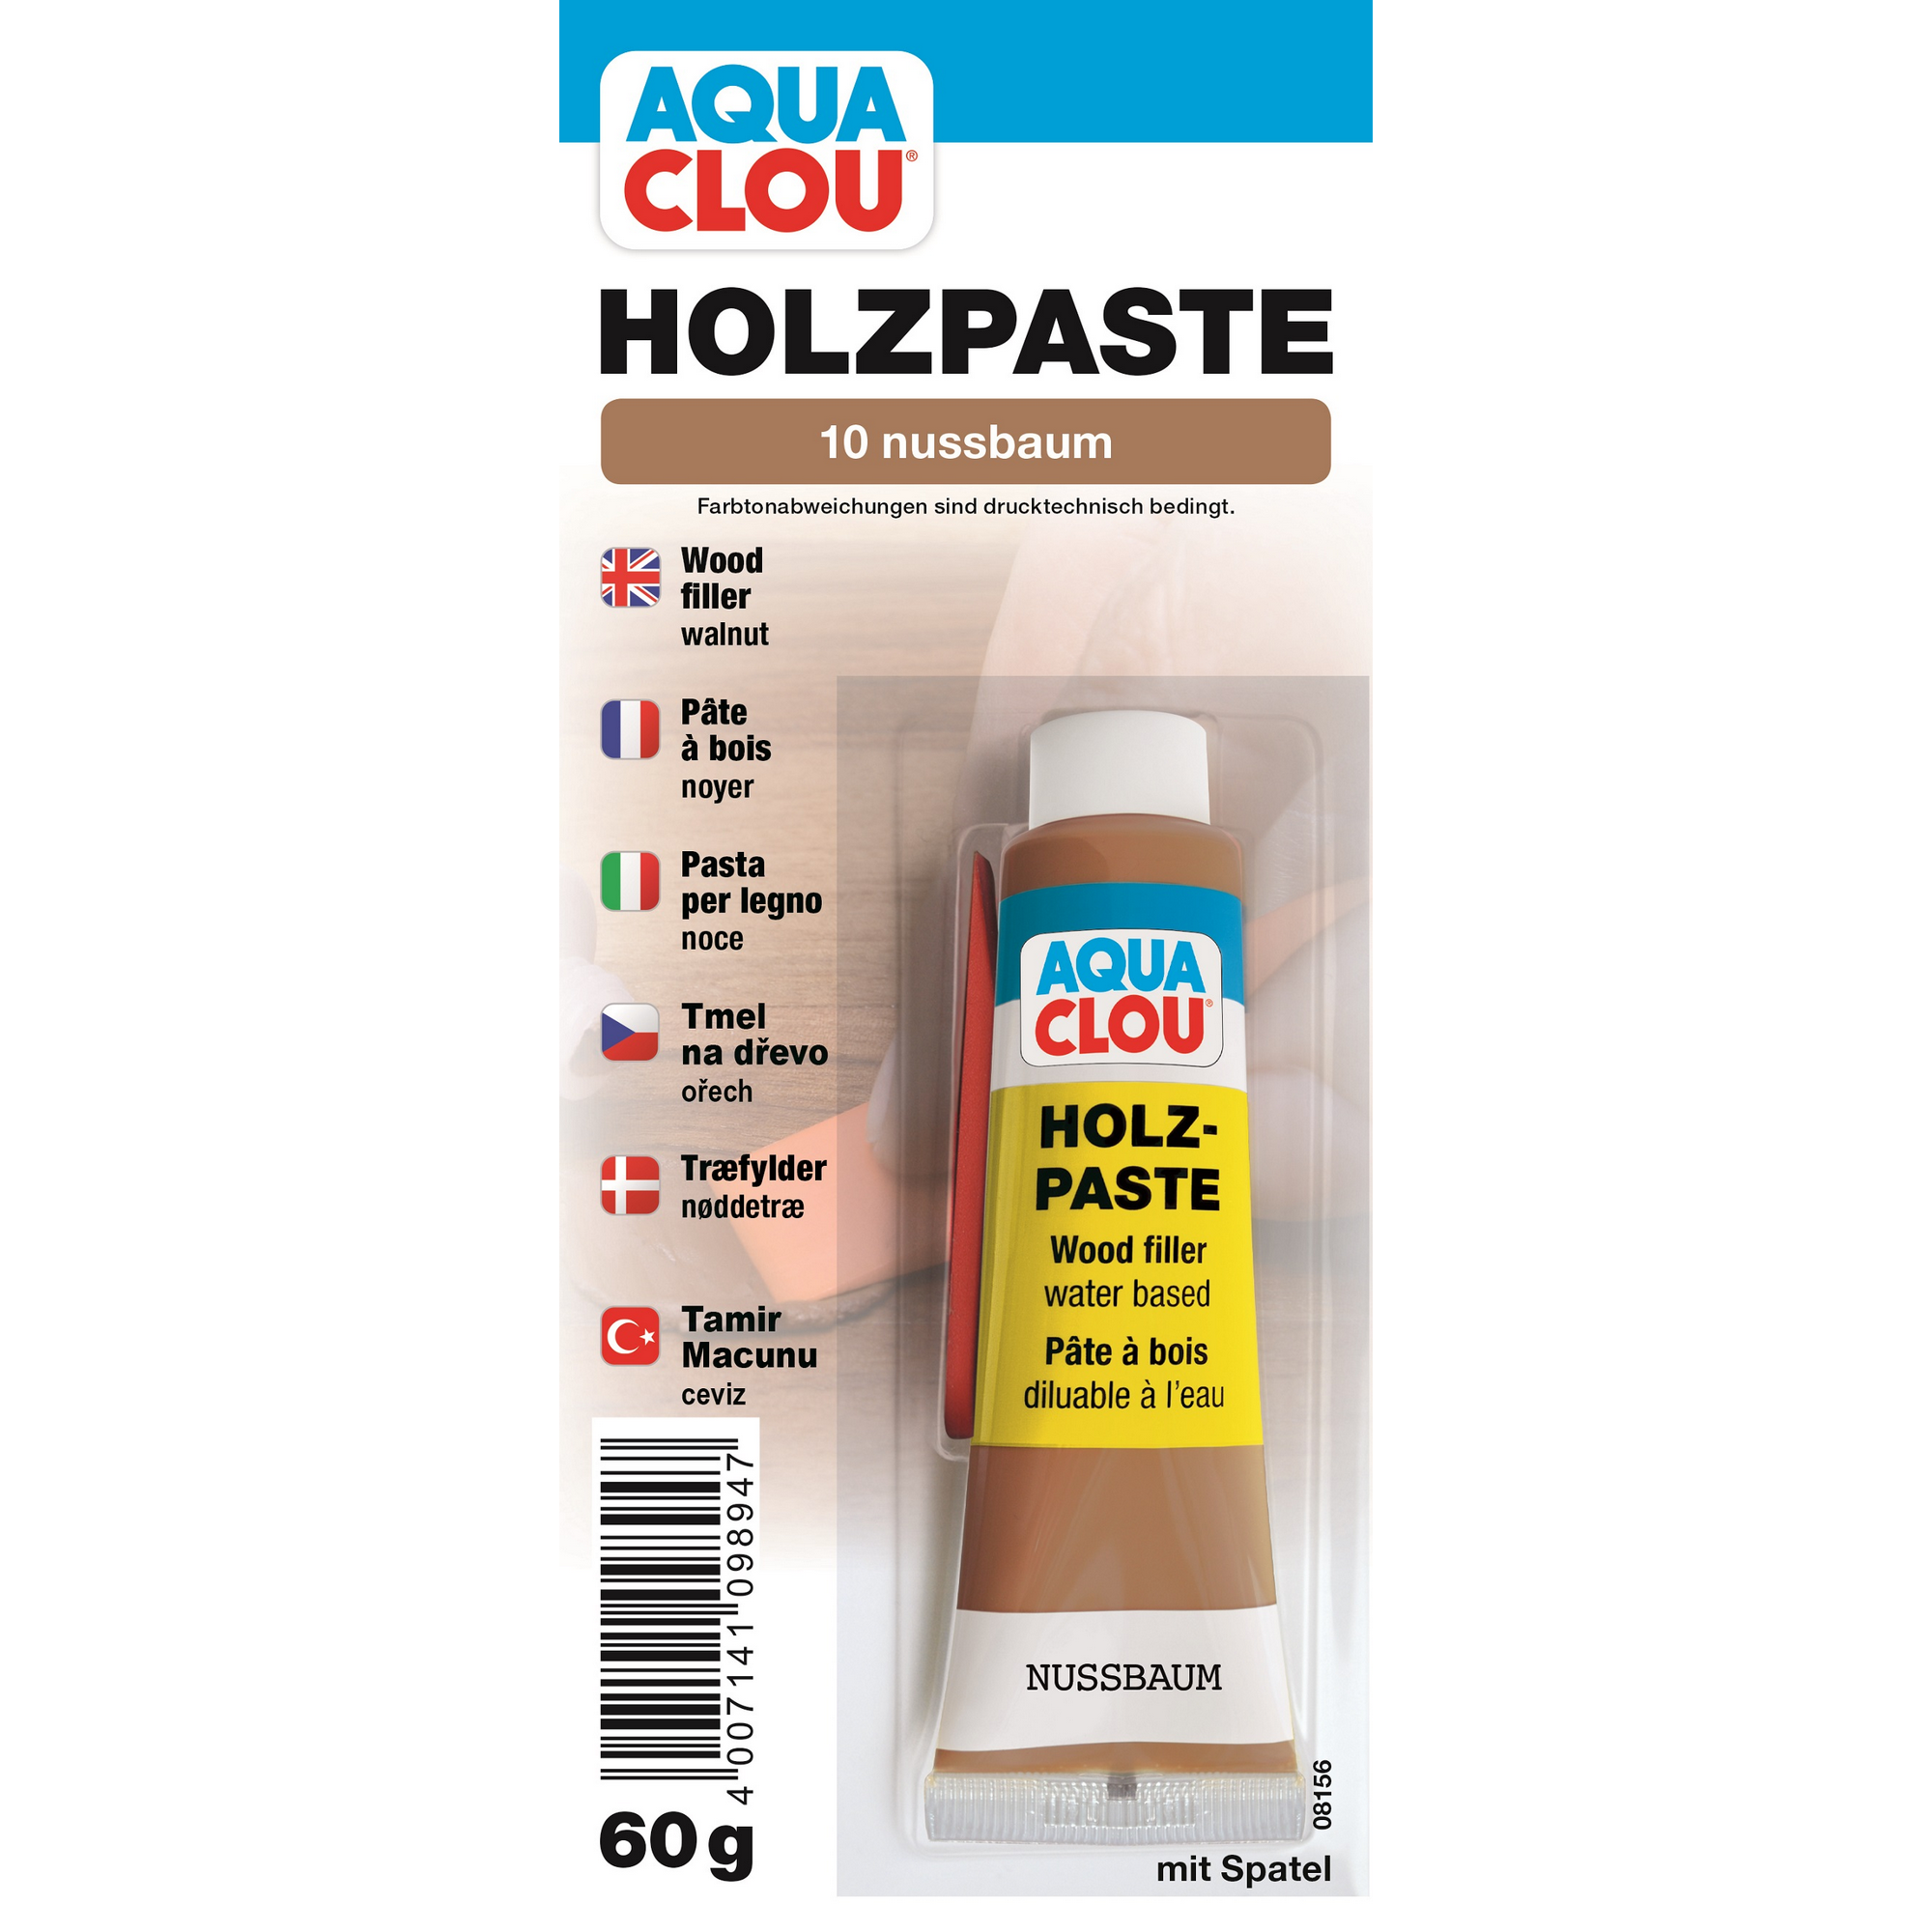 Holzpaste "Aqua" nussbaumfarben 60 g + product picture